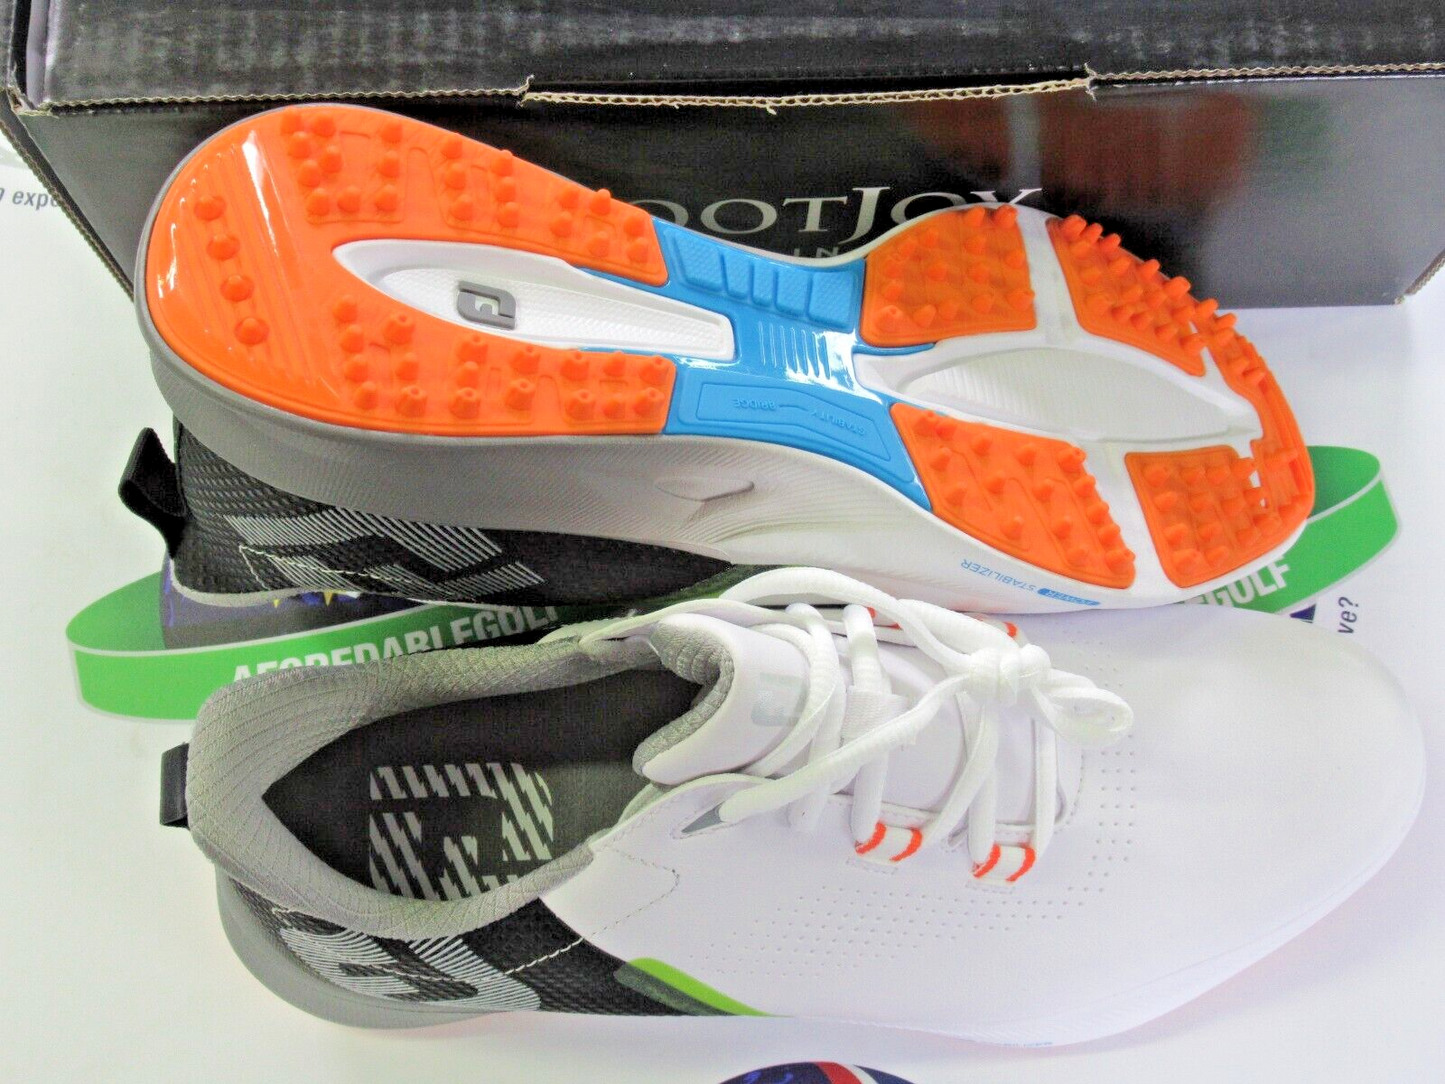 footjoy fj fuel waterproof golf shoes 55443k grey/white uk size 8 medium